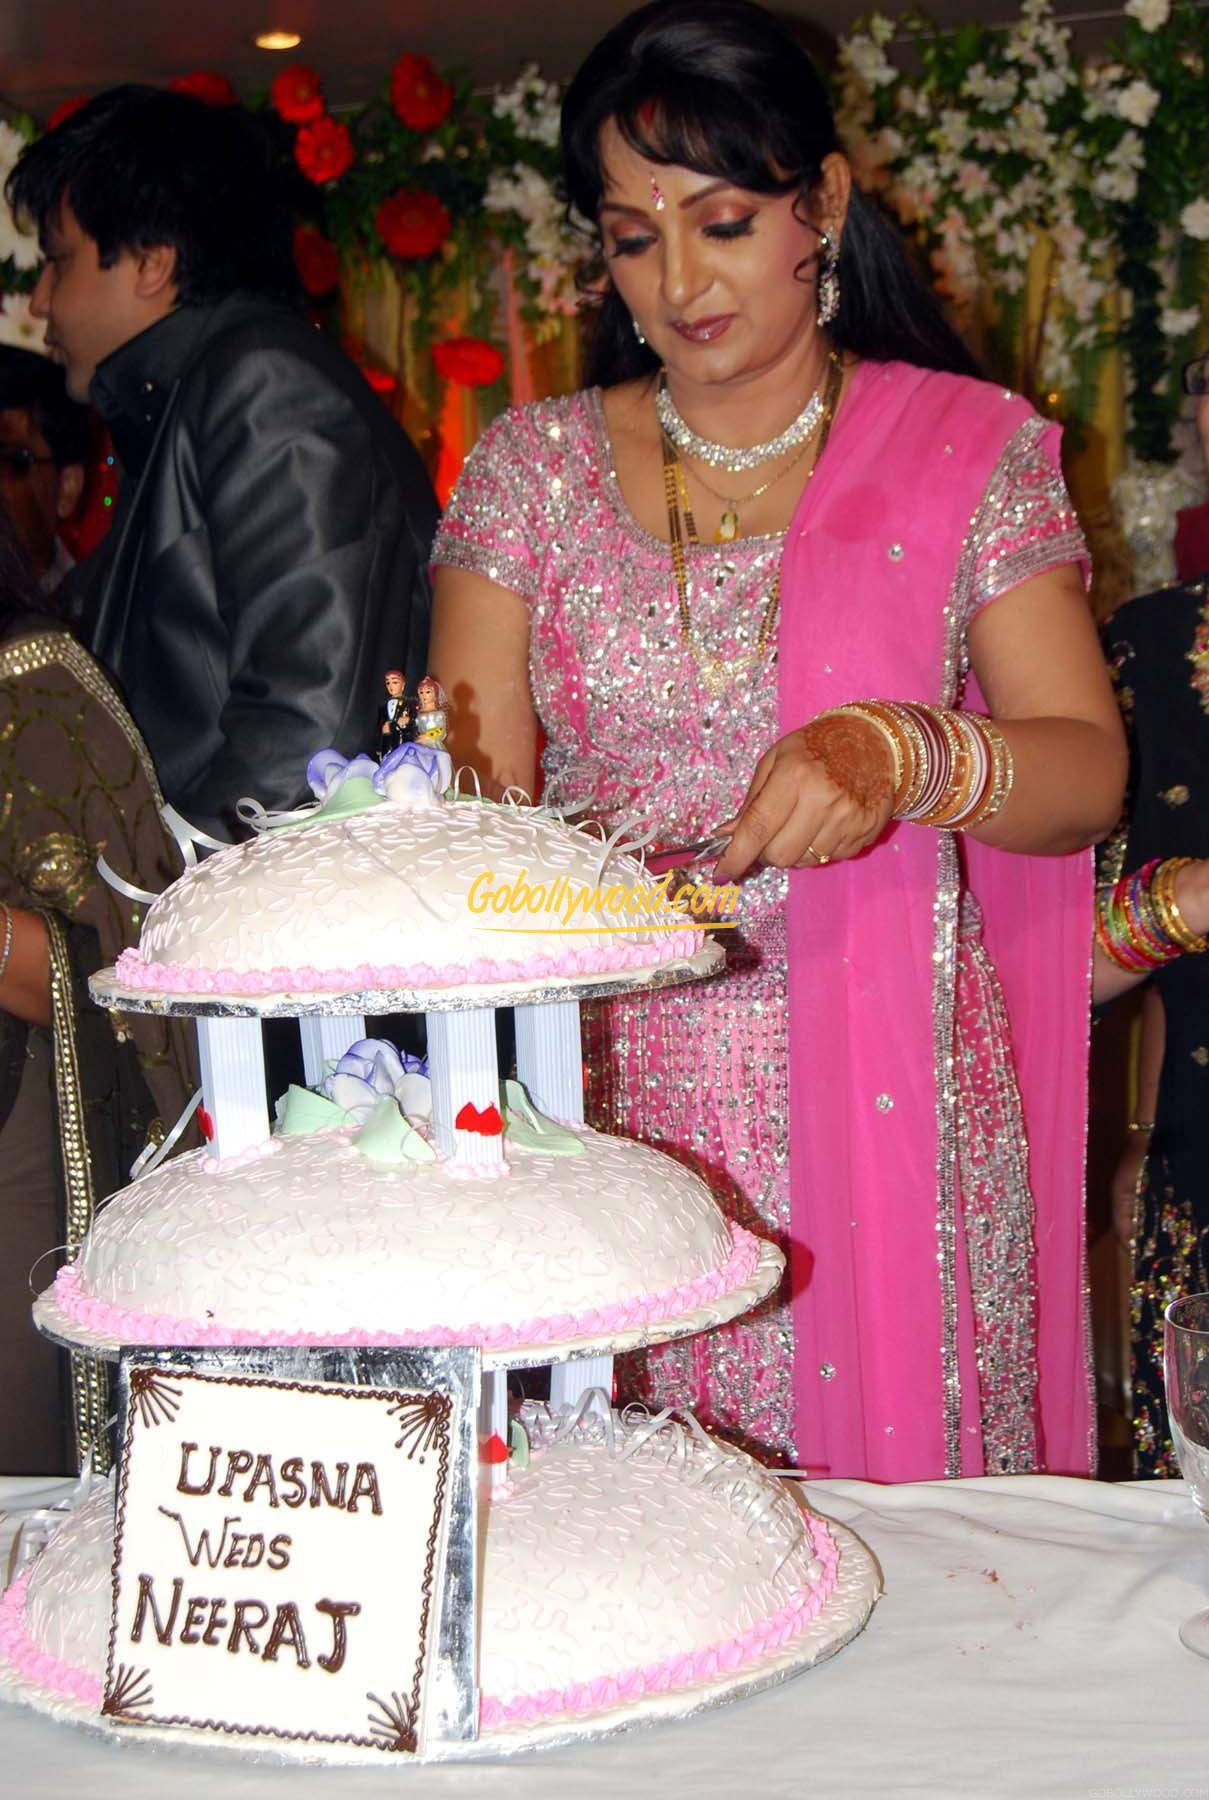 Upasna Singh Cutting Her Wedding Cake